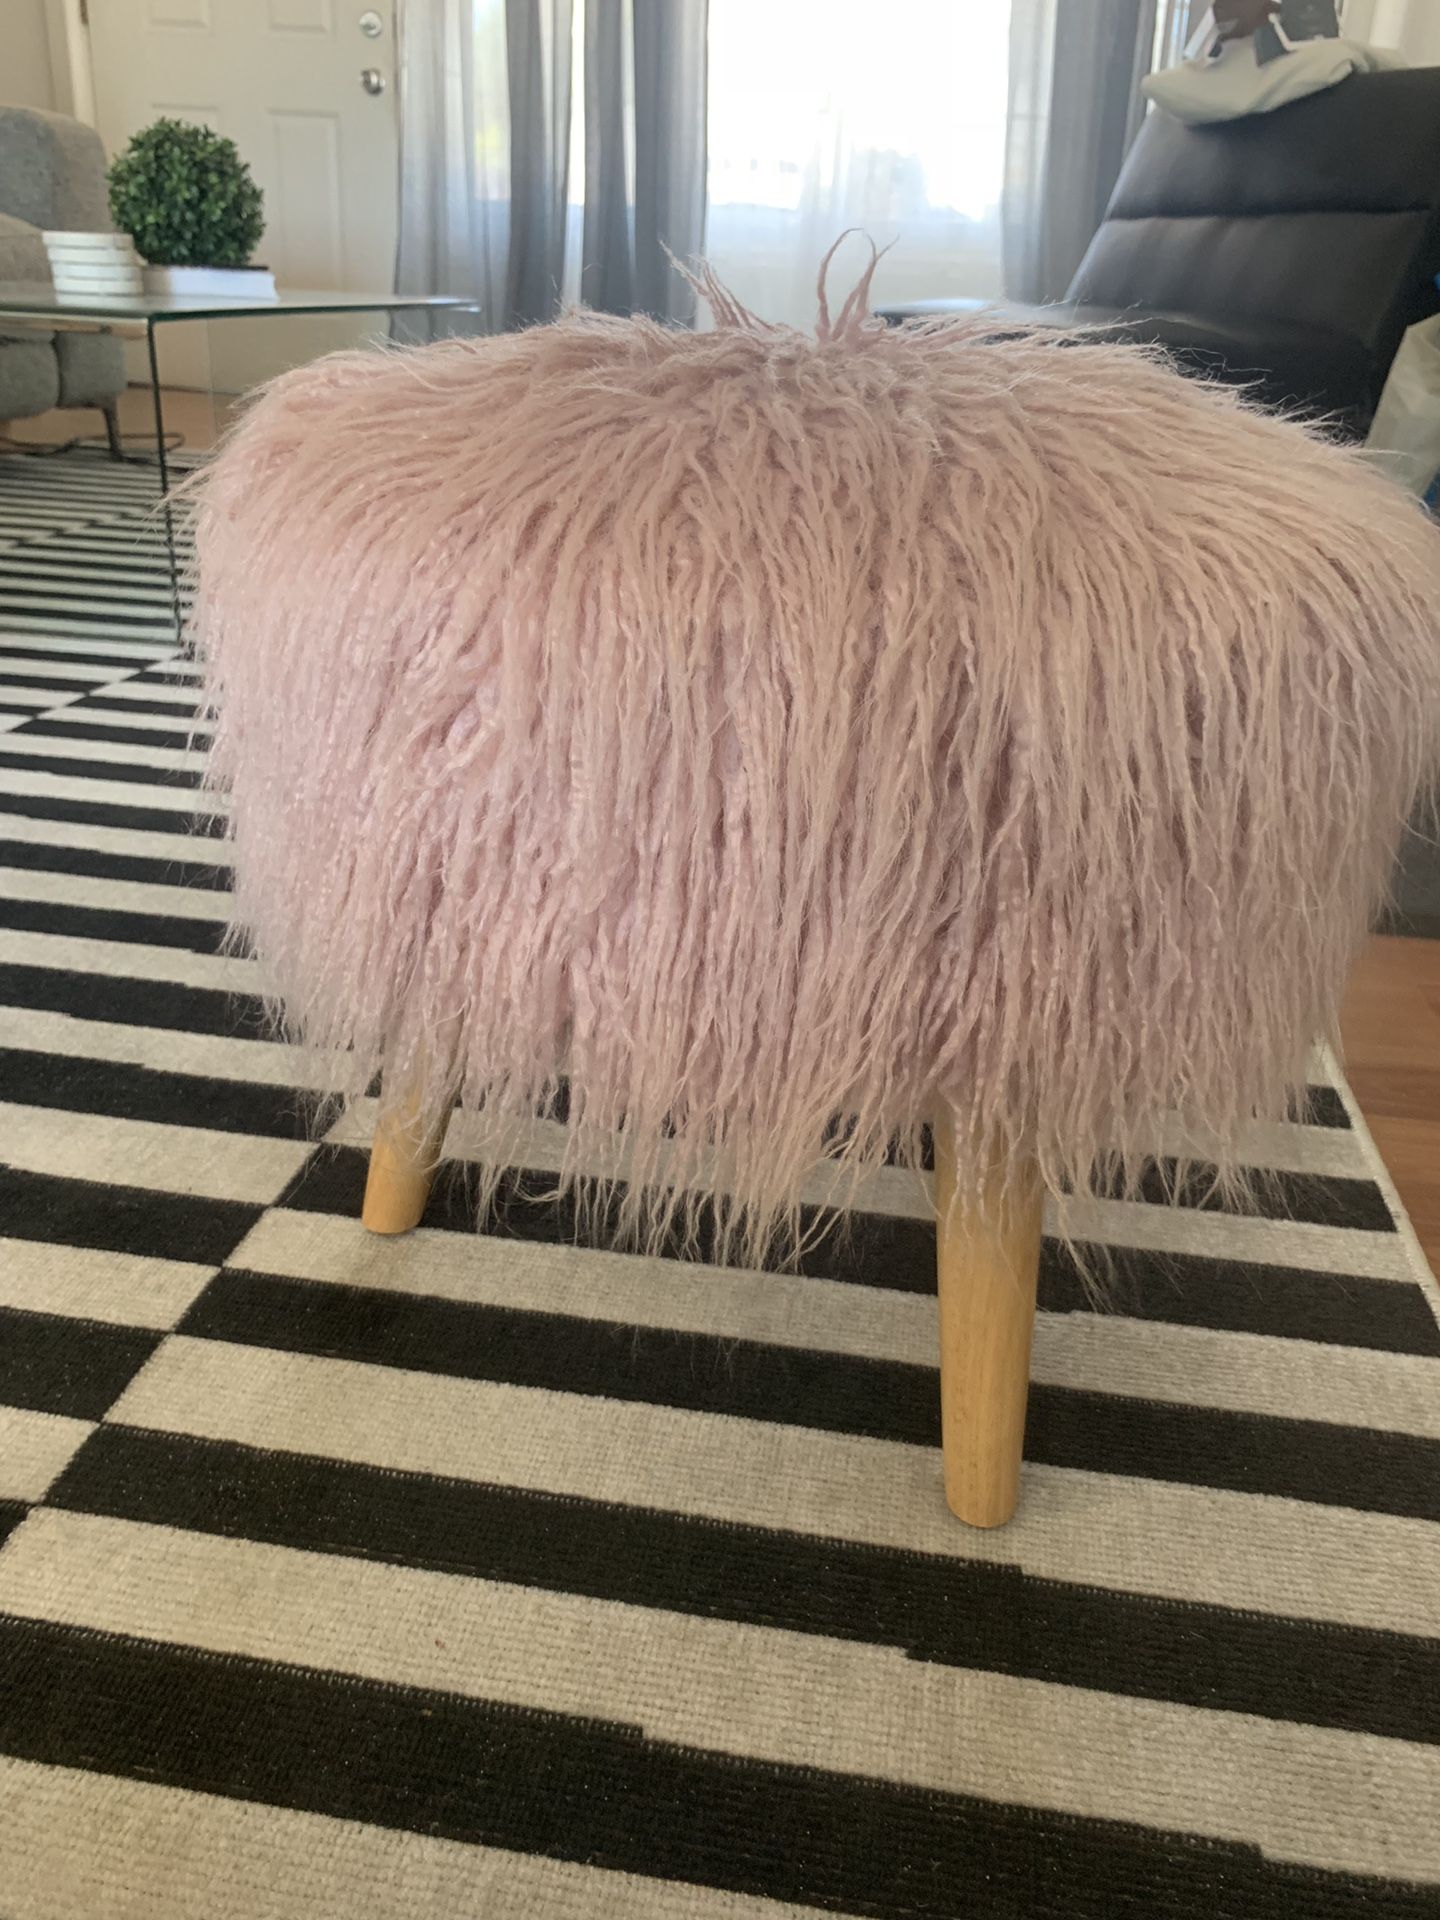 Small fluffy stool